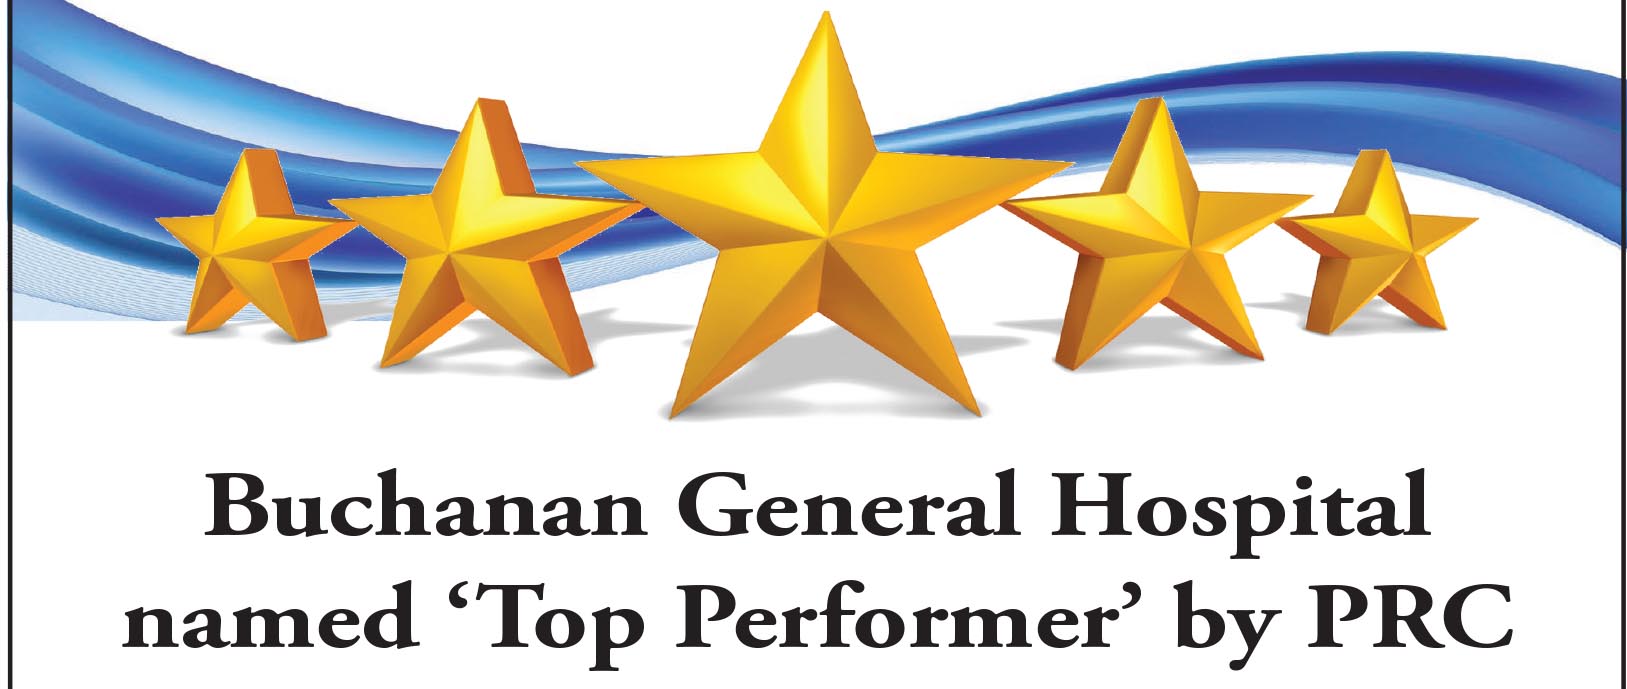 Buchanan General Hospital named "Top Performer" by PRC